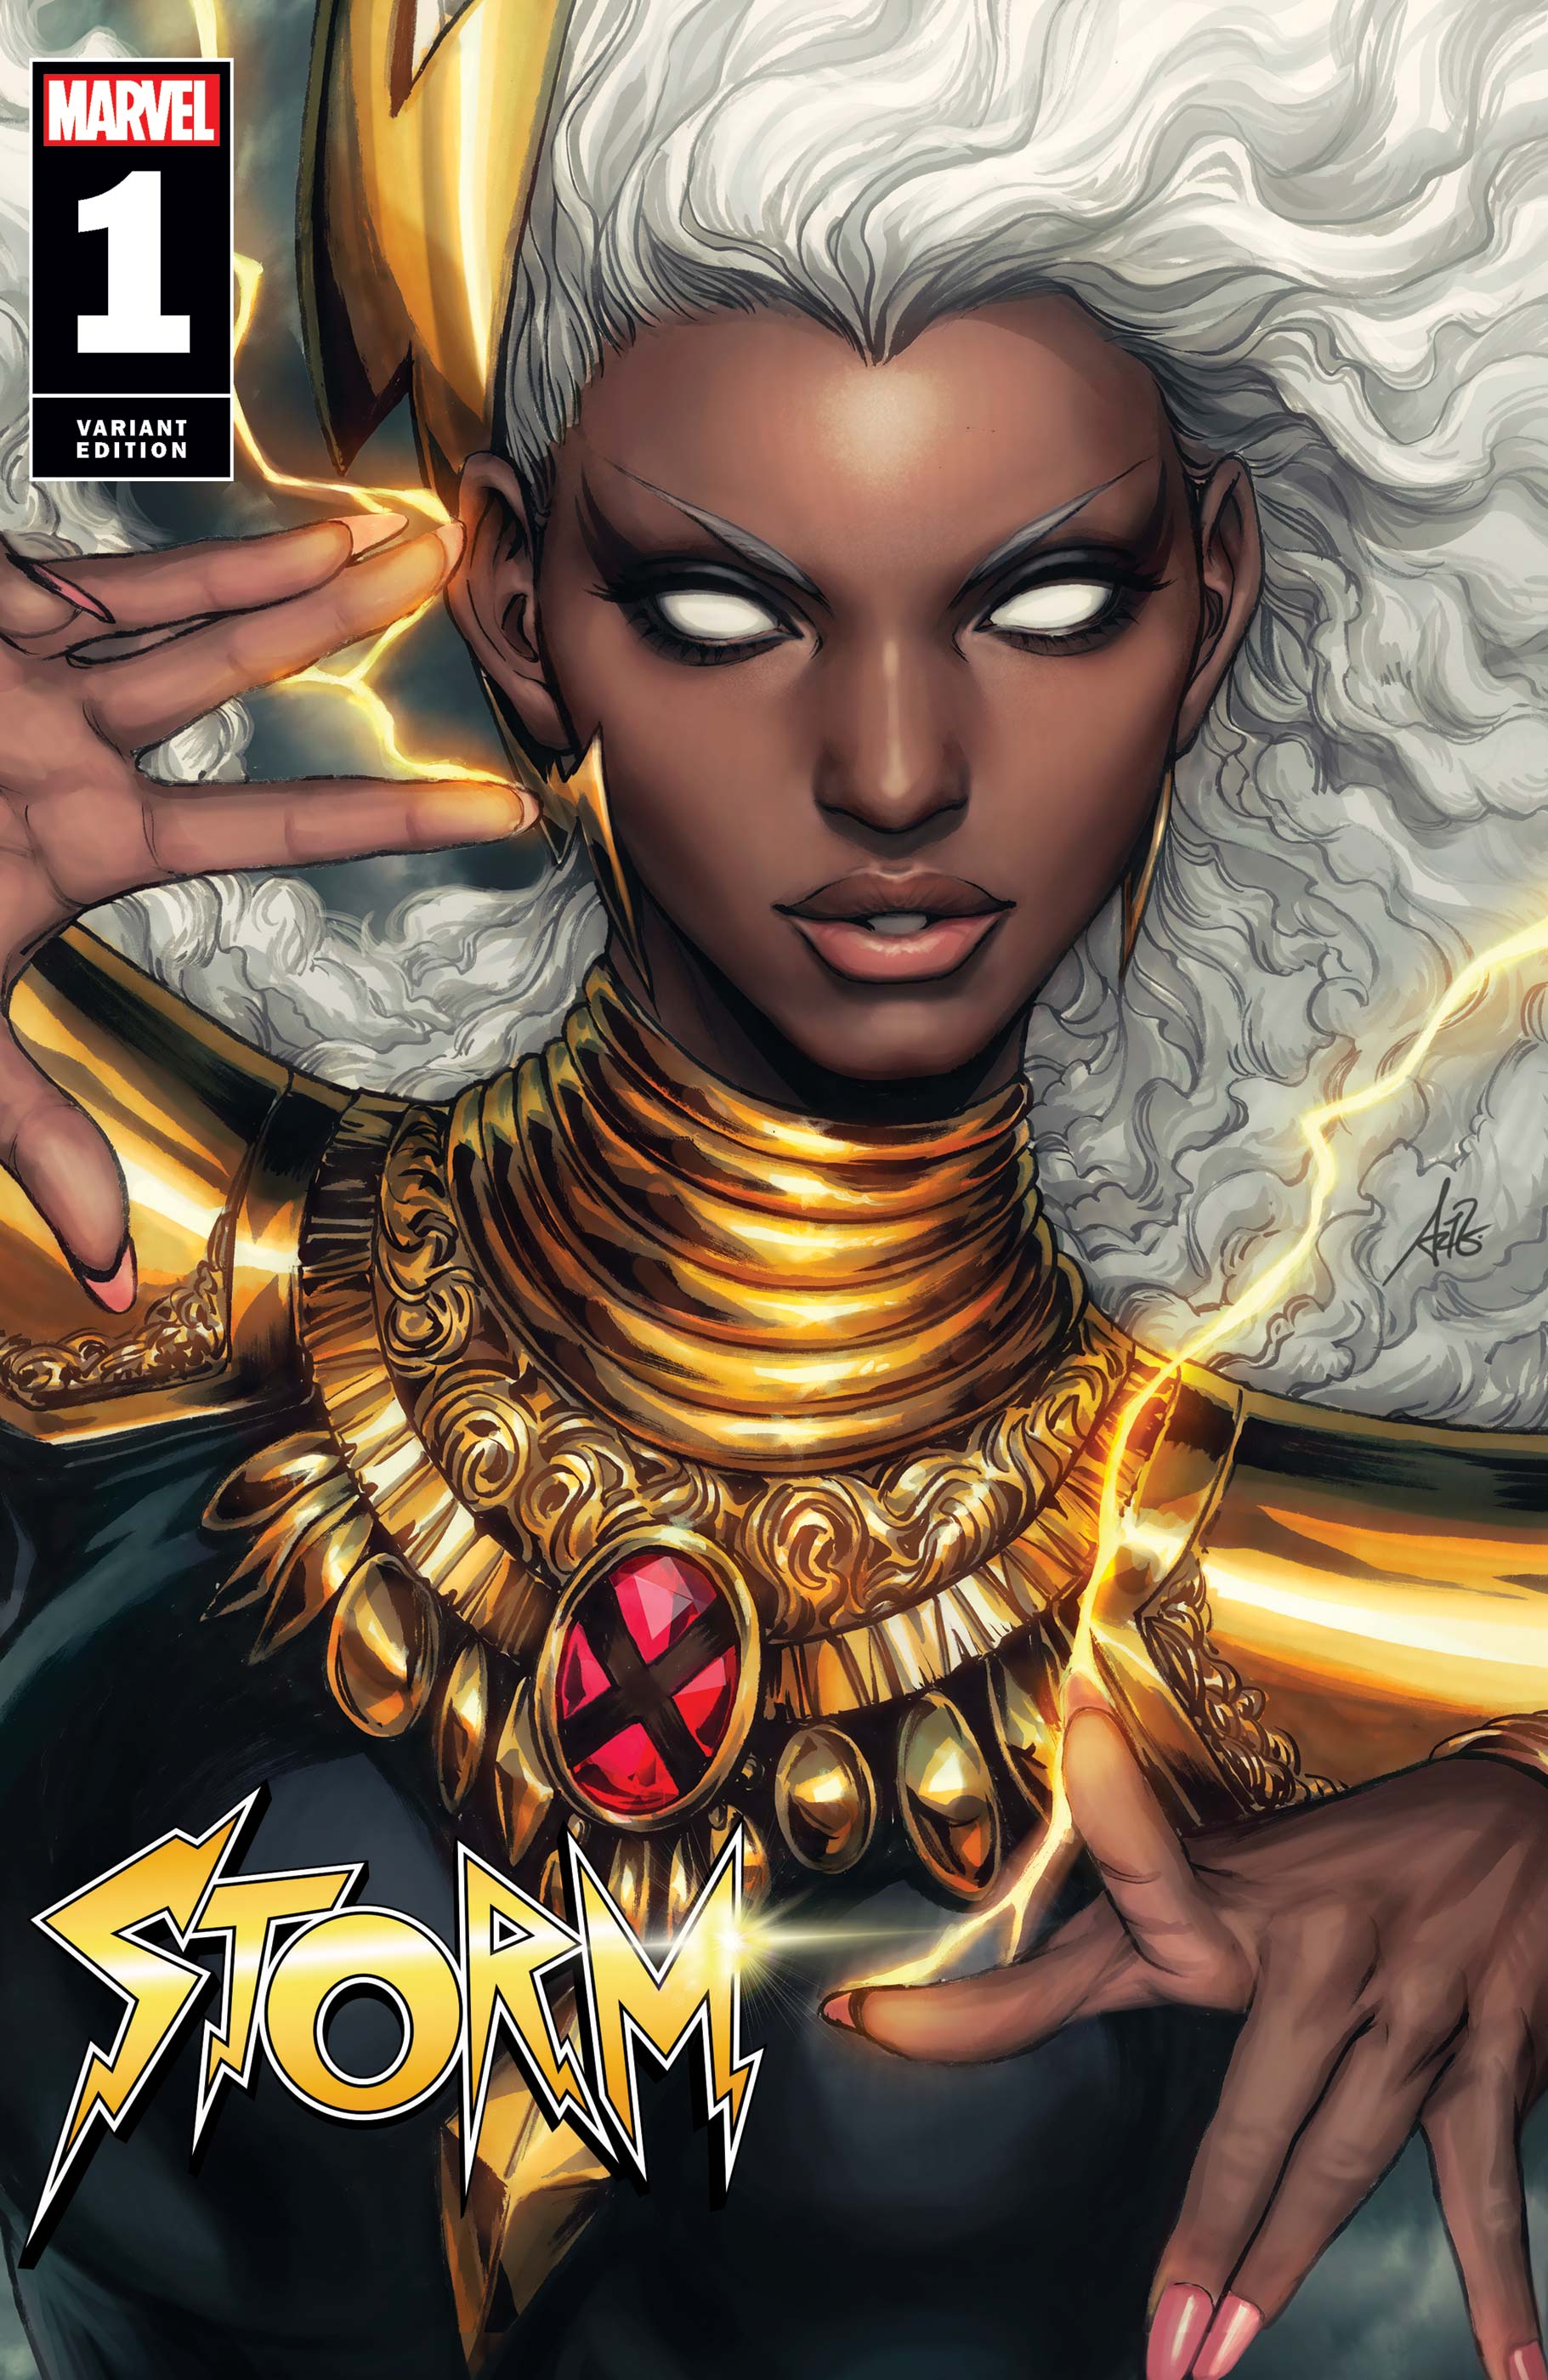 Marvel Reveals Variant Cover for Storm #1 